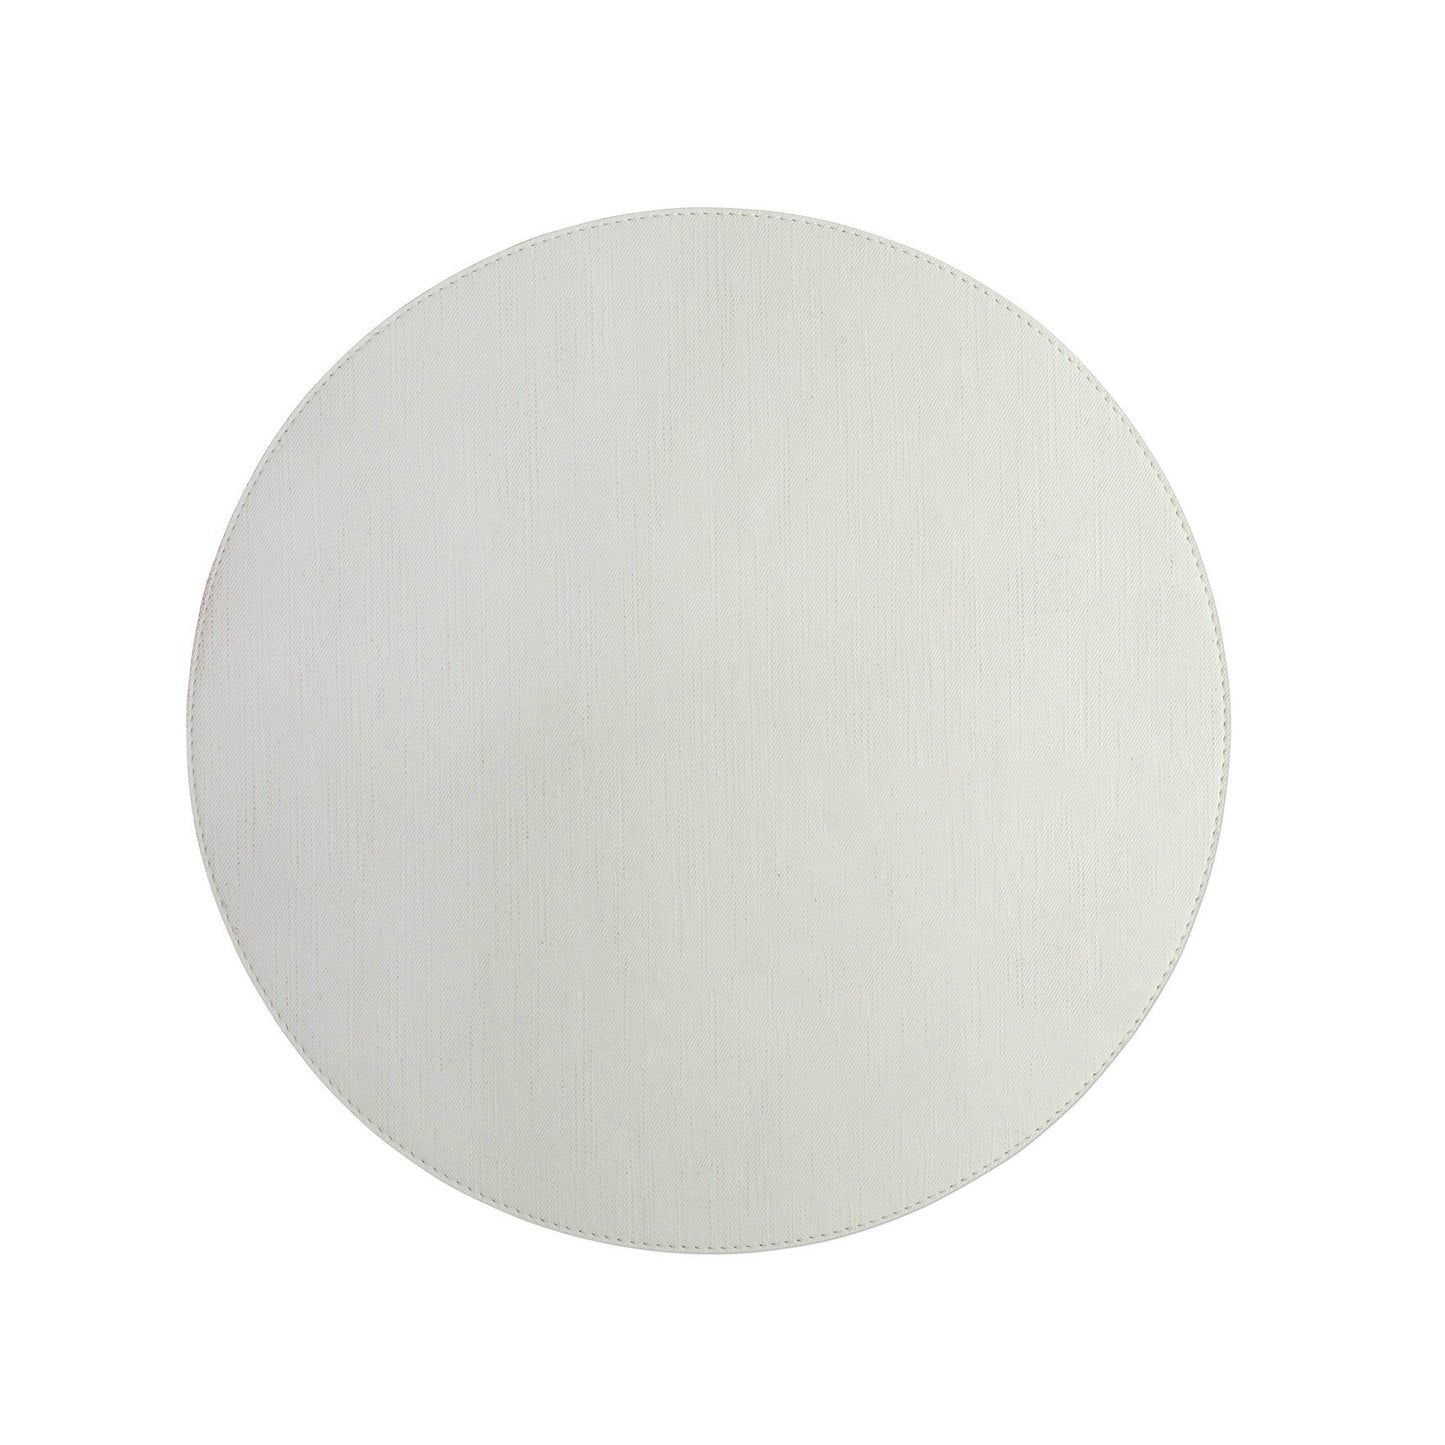 Vietri Reversible Round Placemats - Gray/White (Set of 4)